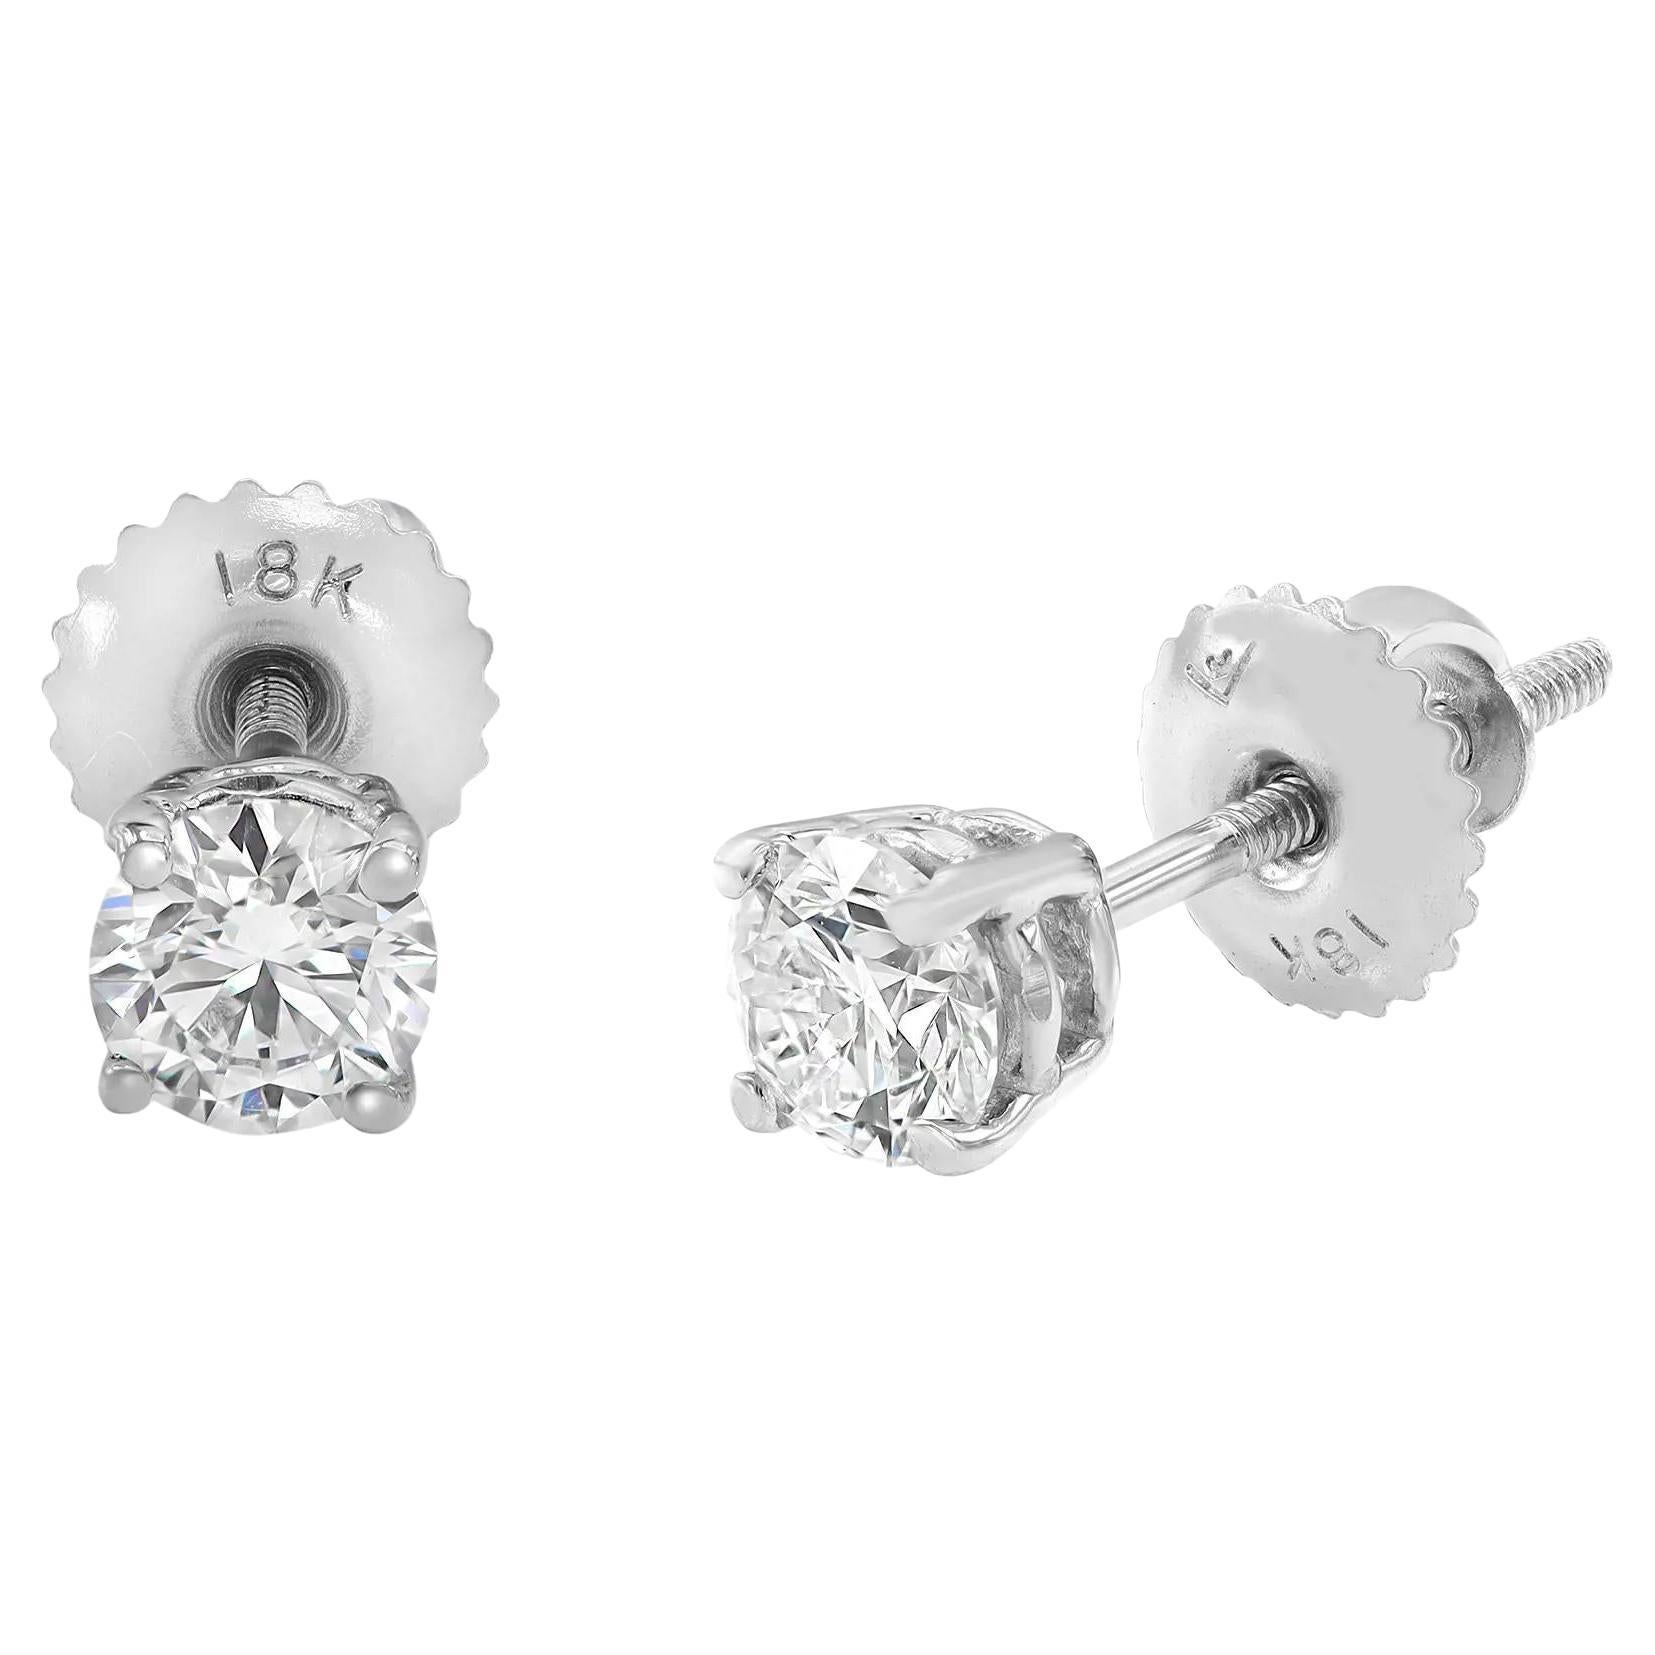 Rachel Koen Round Diamond Solitaire Stud Earrings 18K White Gold 0.70Cttw